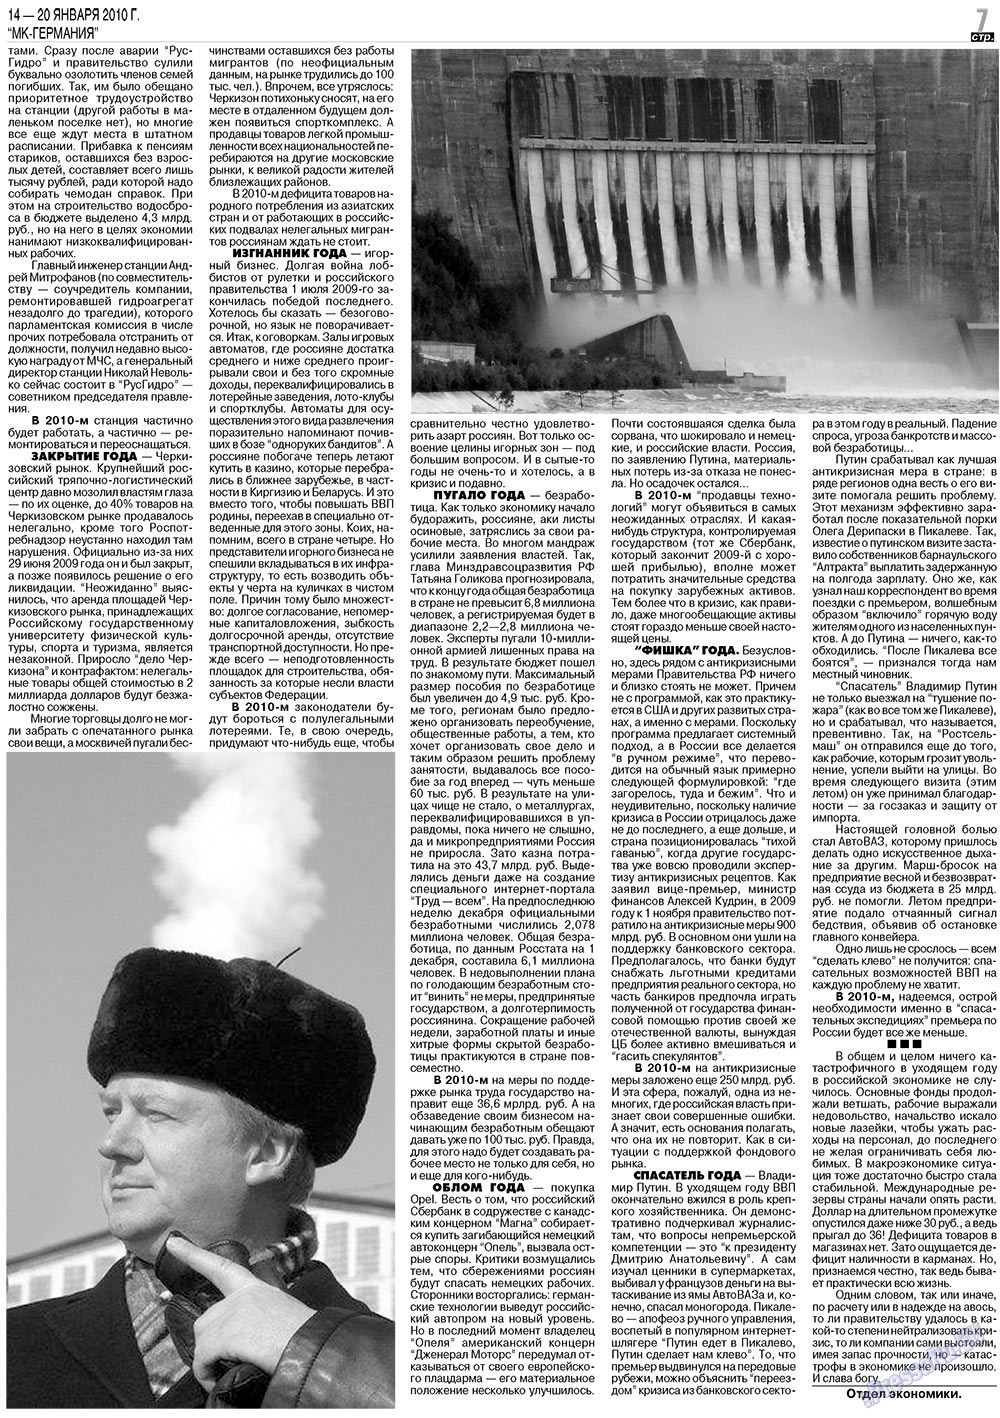 МК-Германия, газета. 2010 №3 стр.7